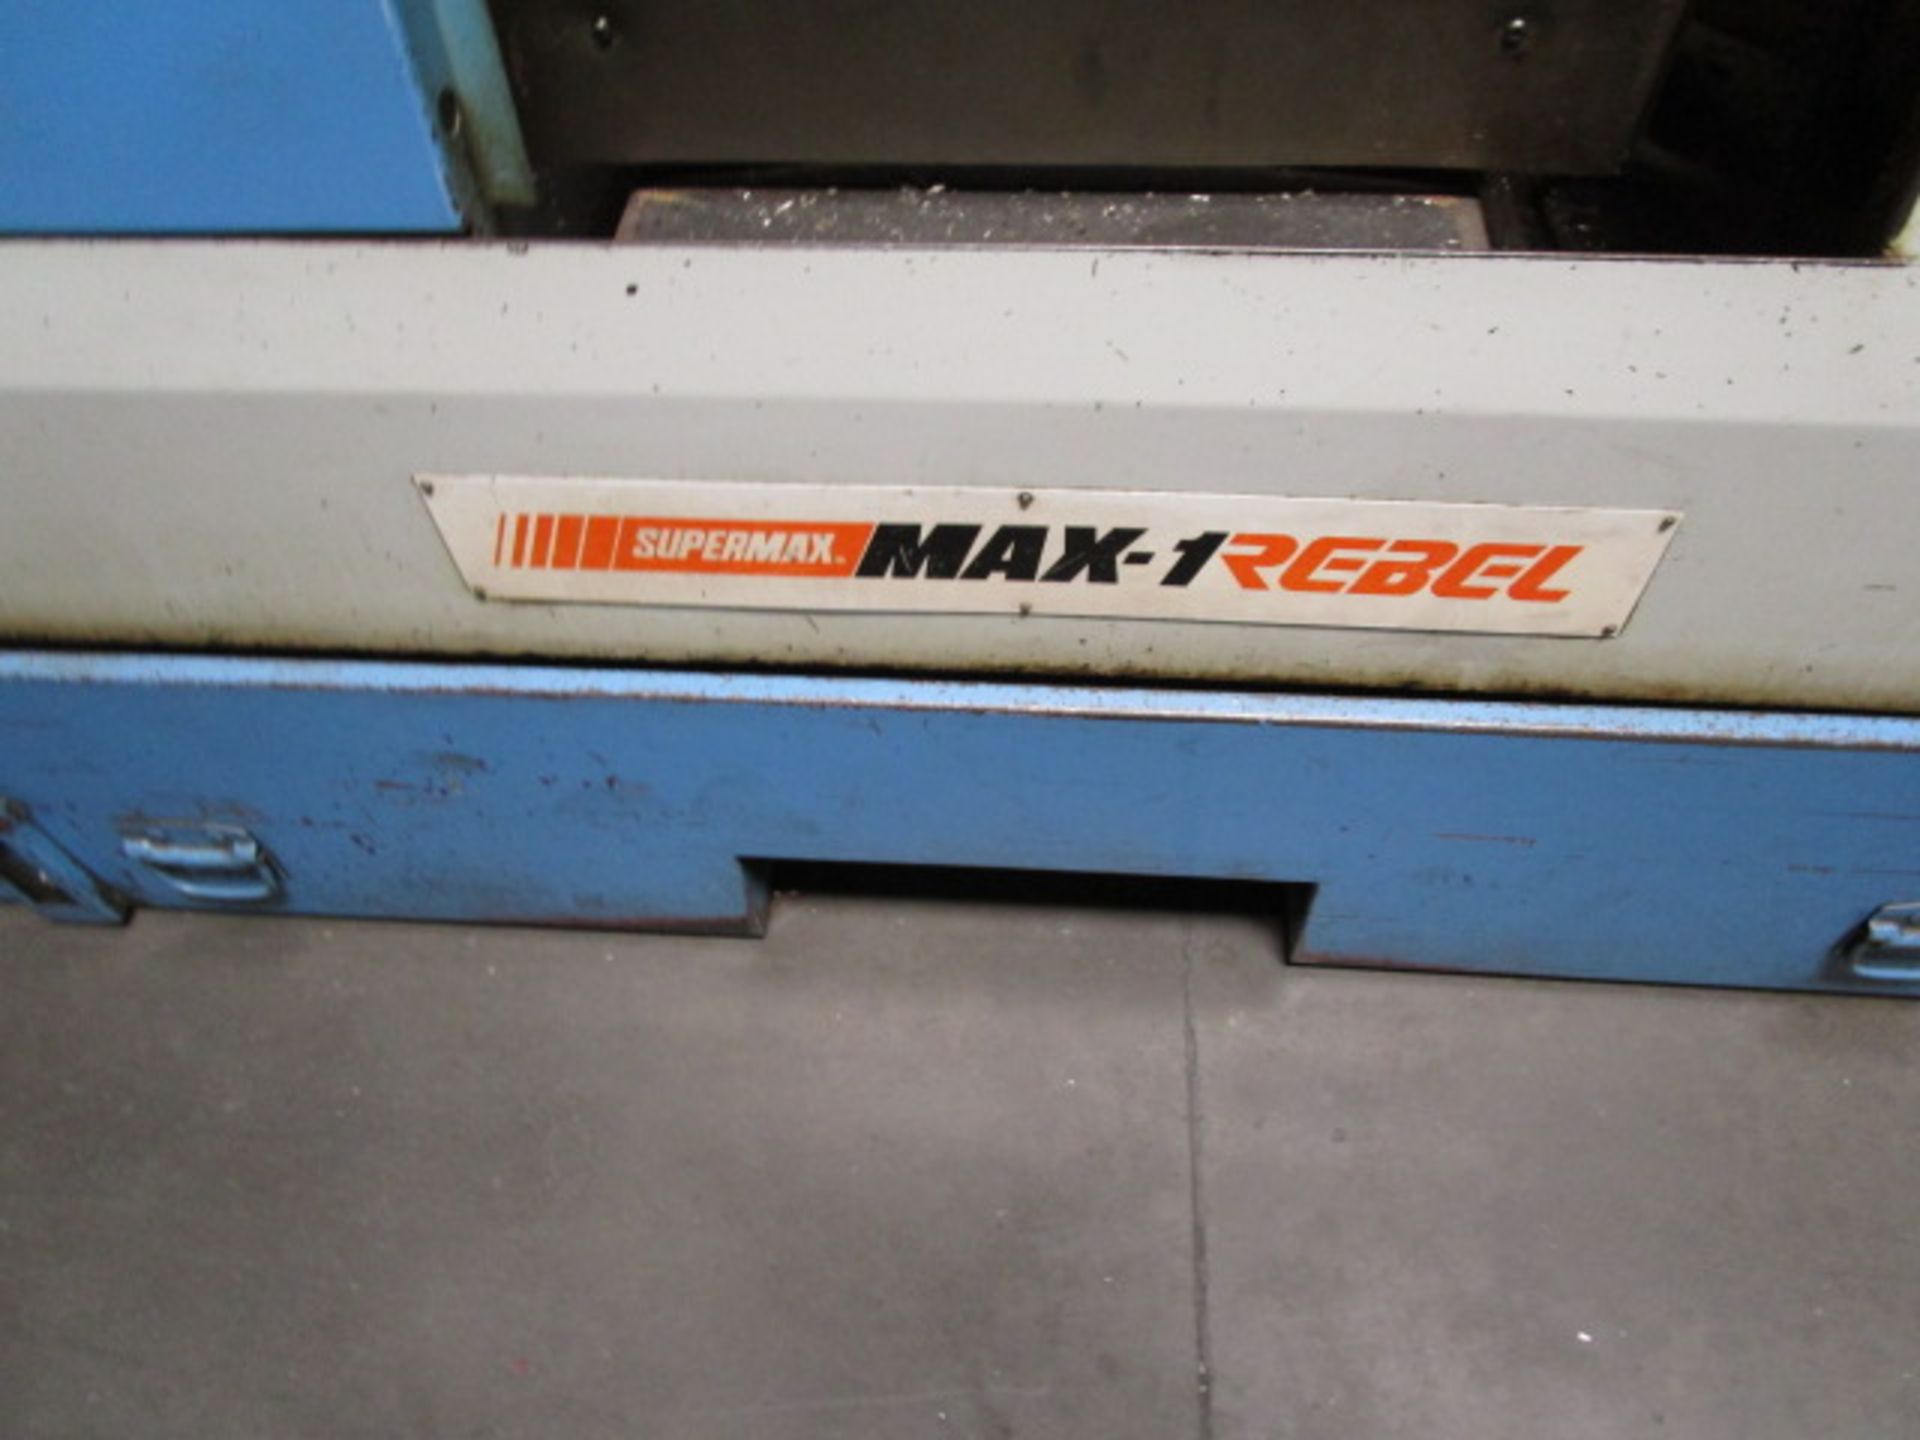 SuperMax Max-1 Rebel CNC Vertical Machining Center, Model MAX-1 REBEL, Serial Number 710723 - Image 8 of 12